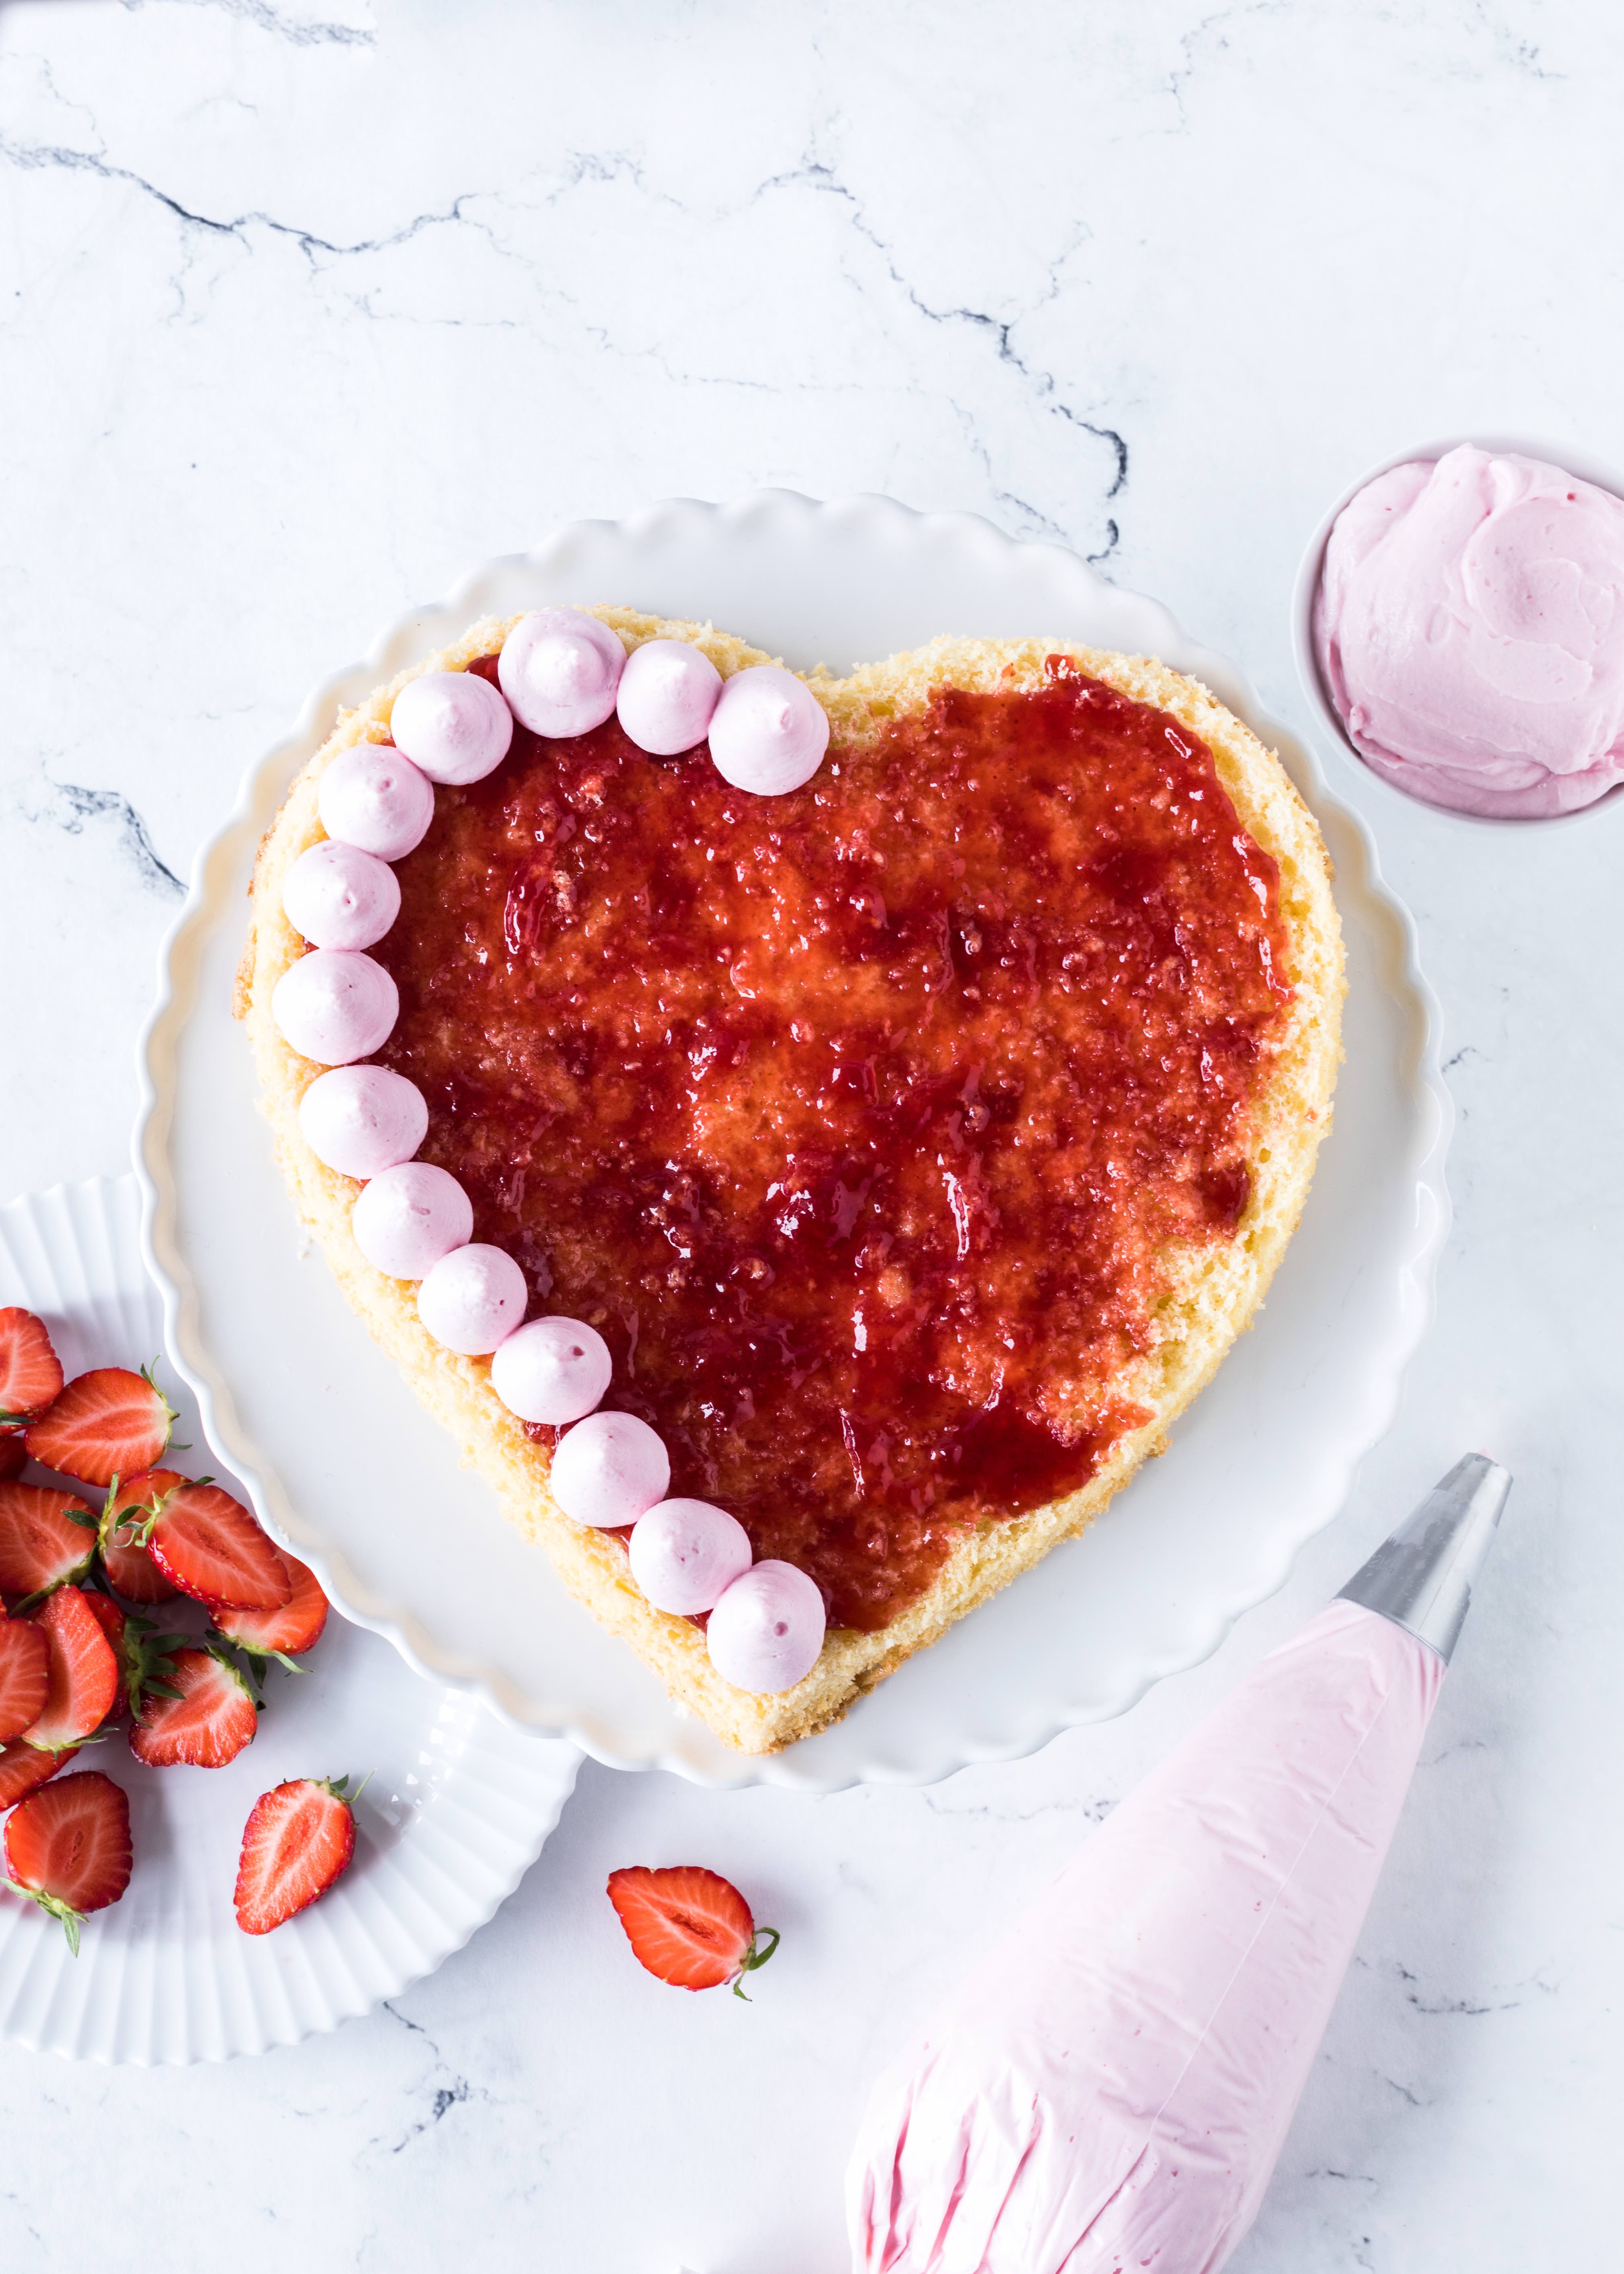 Erdbeer Herz Torte — Rezepte Suchen